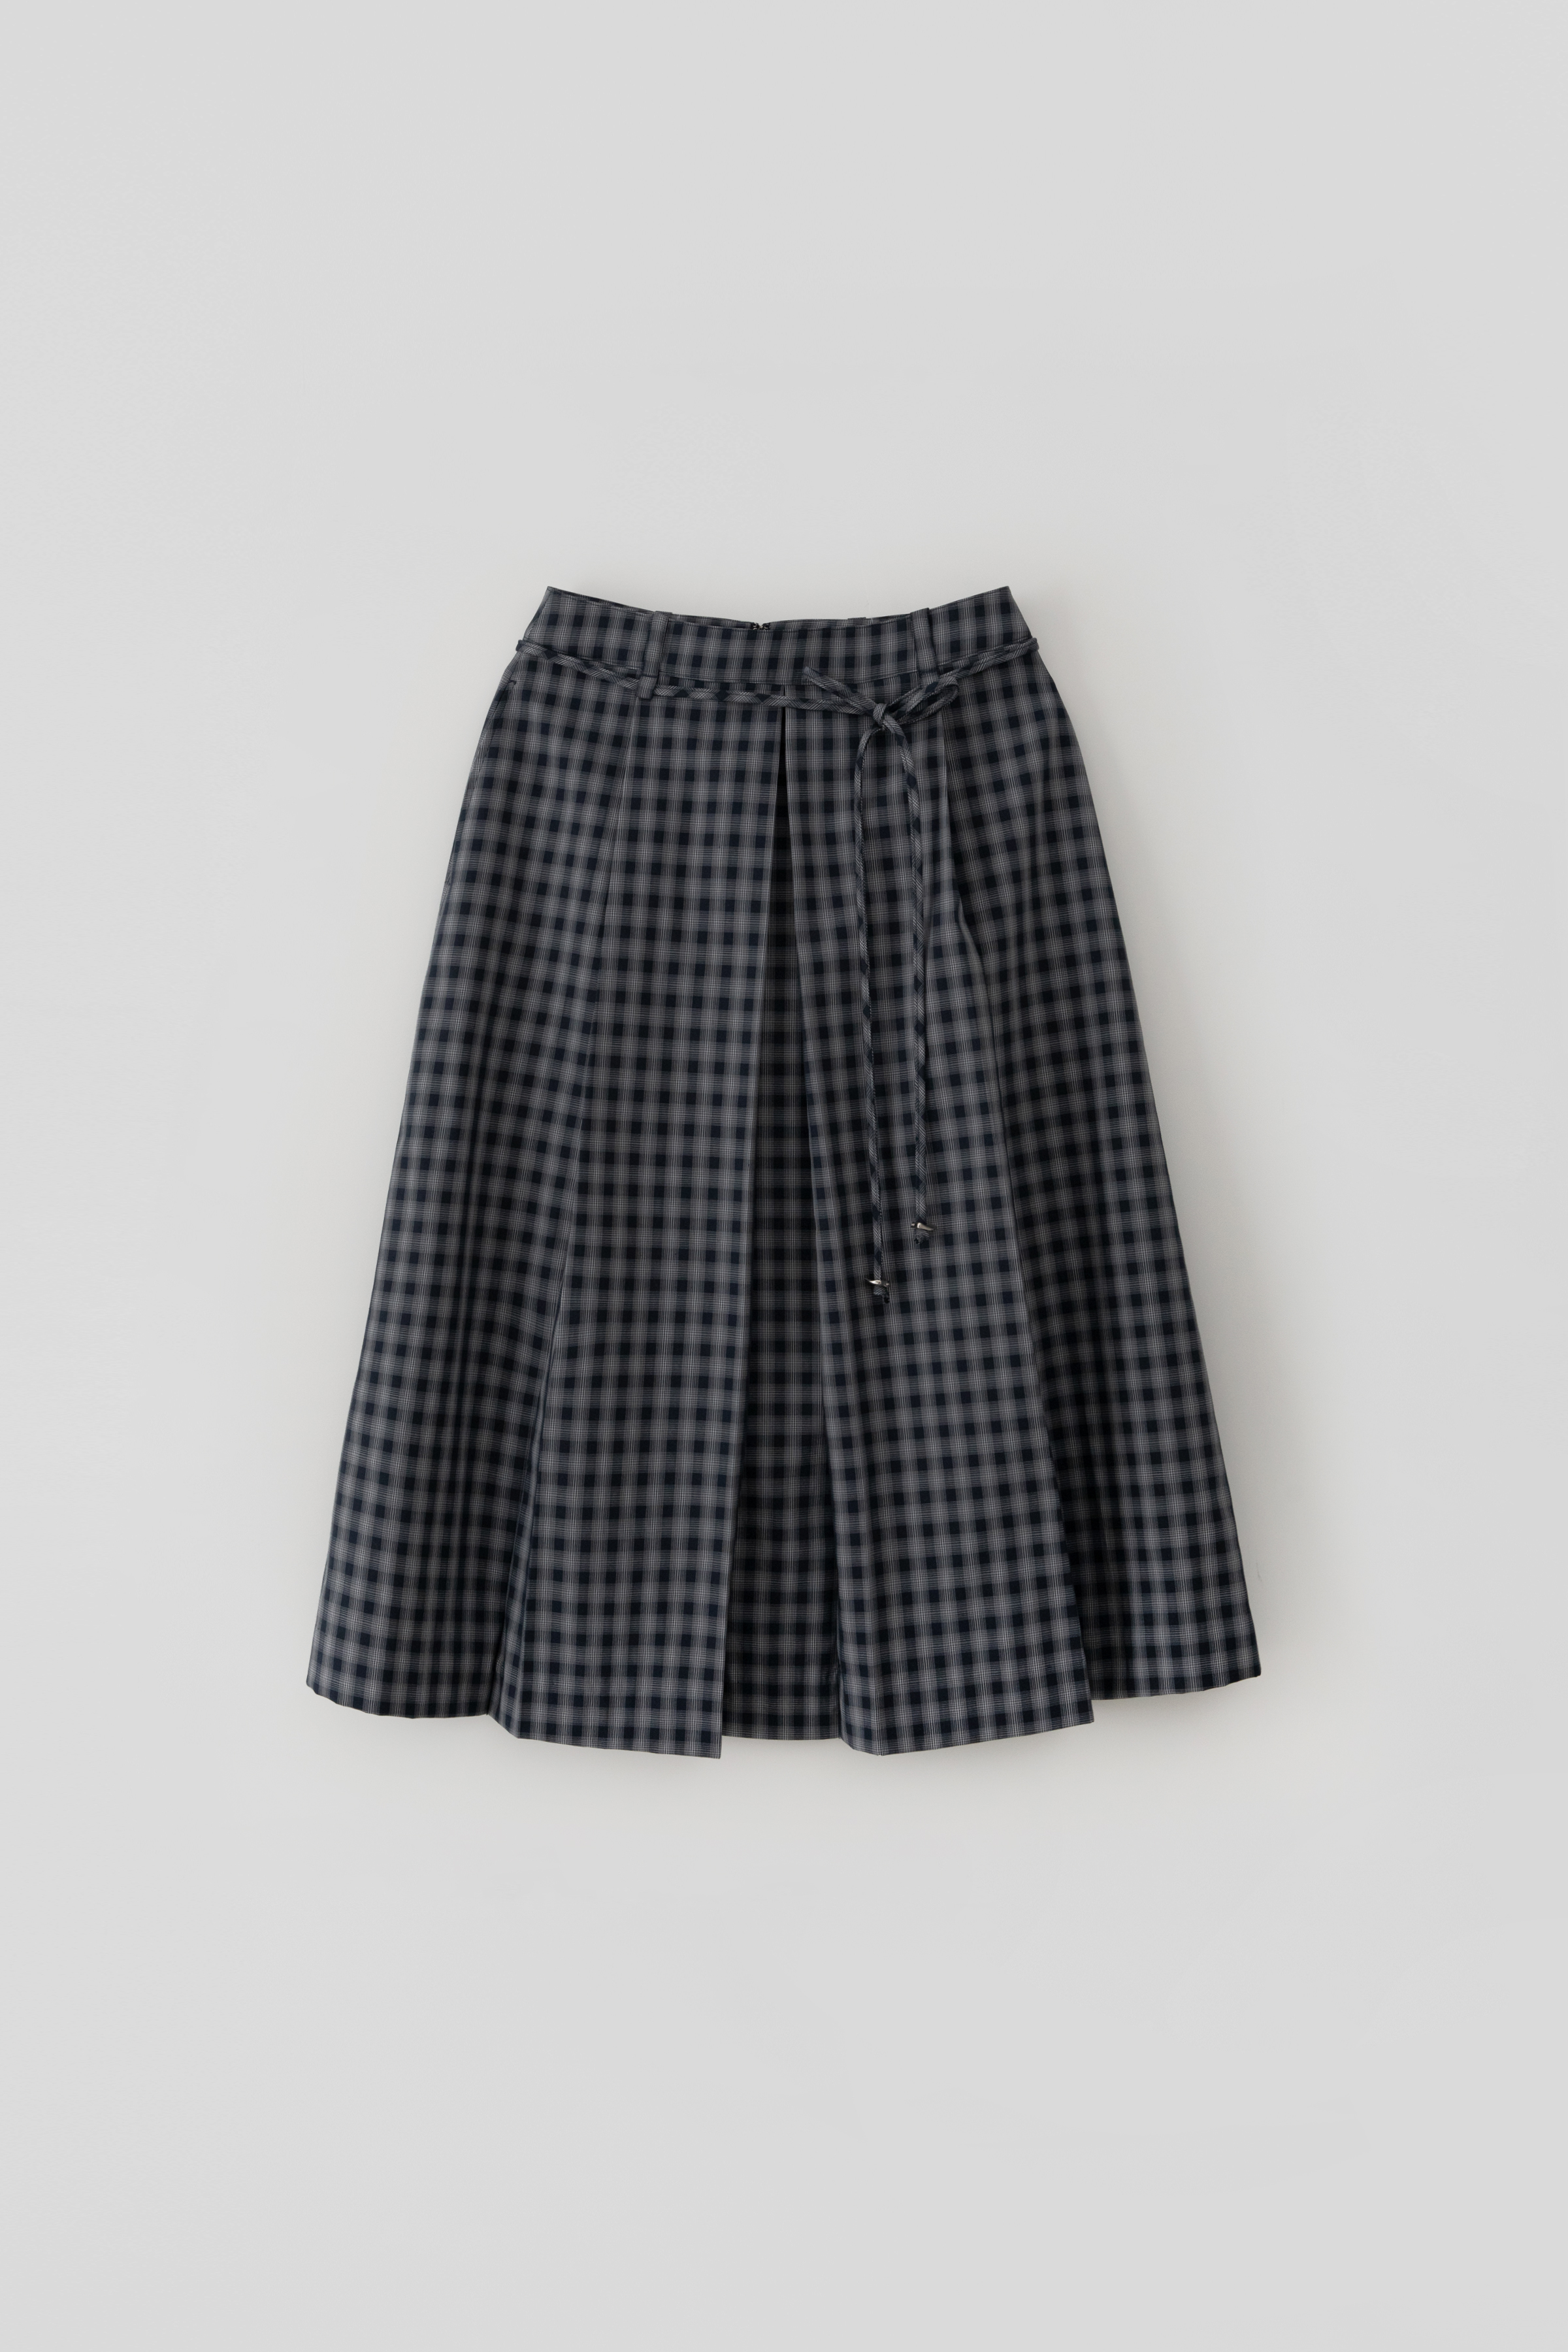 Check Pleats Skirt_Navy